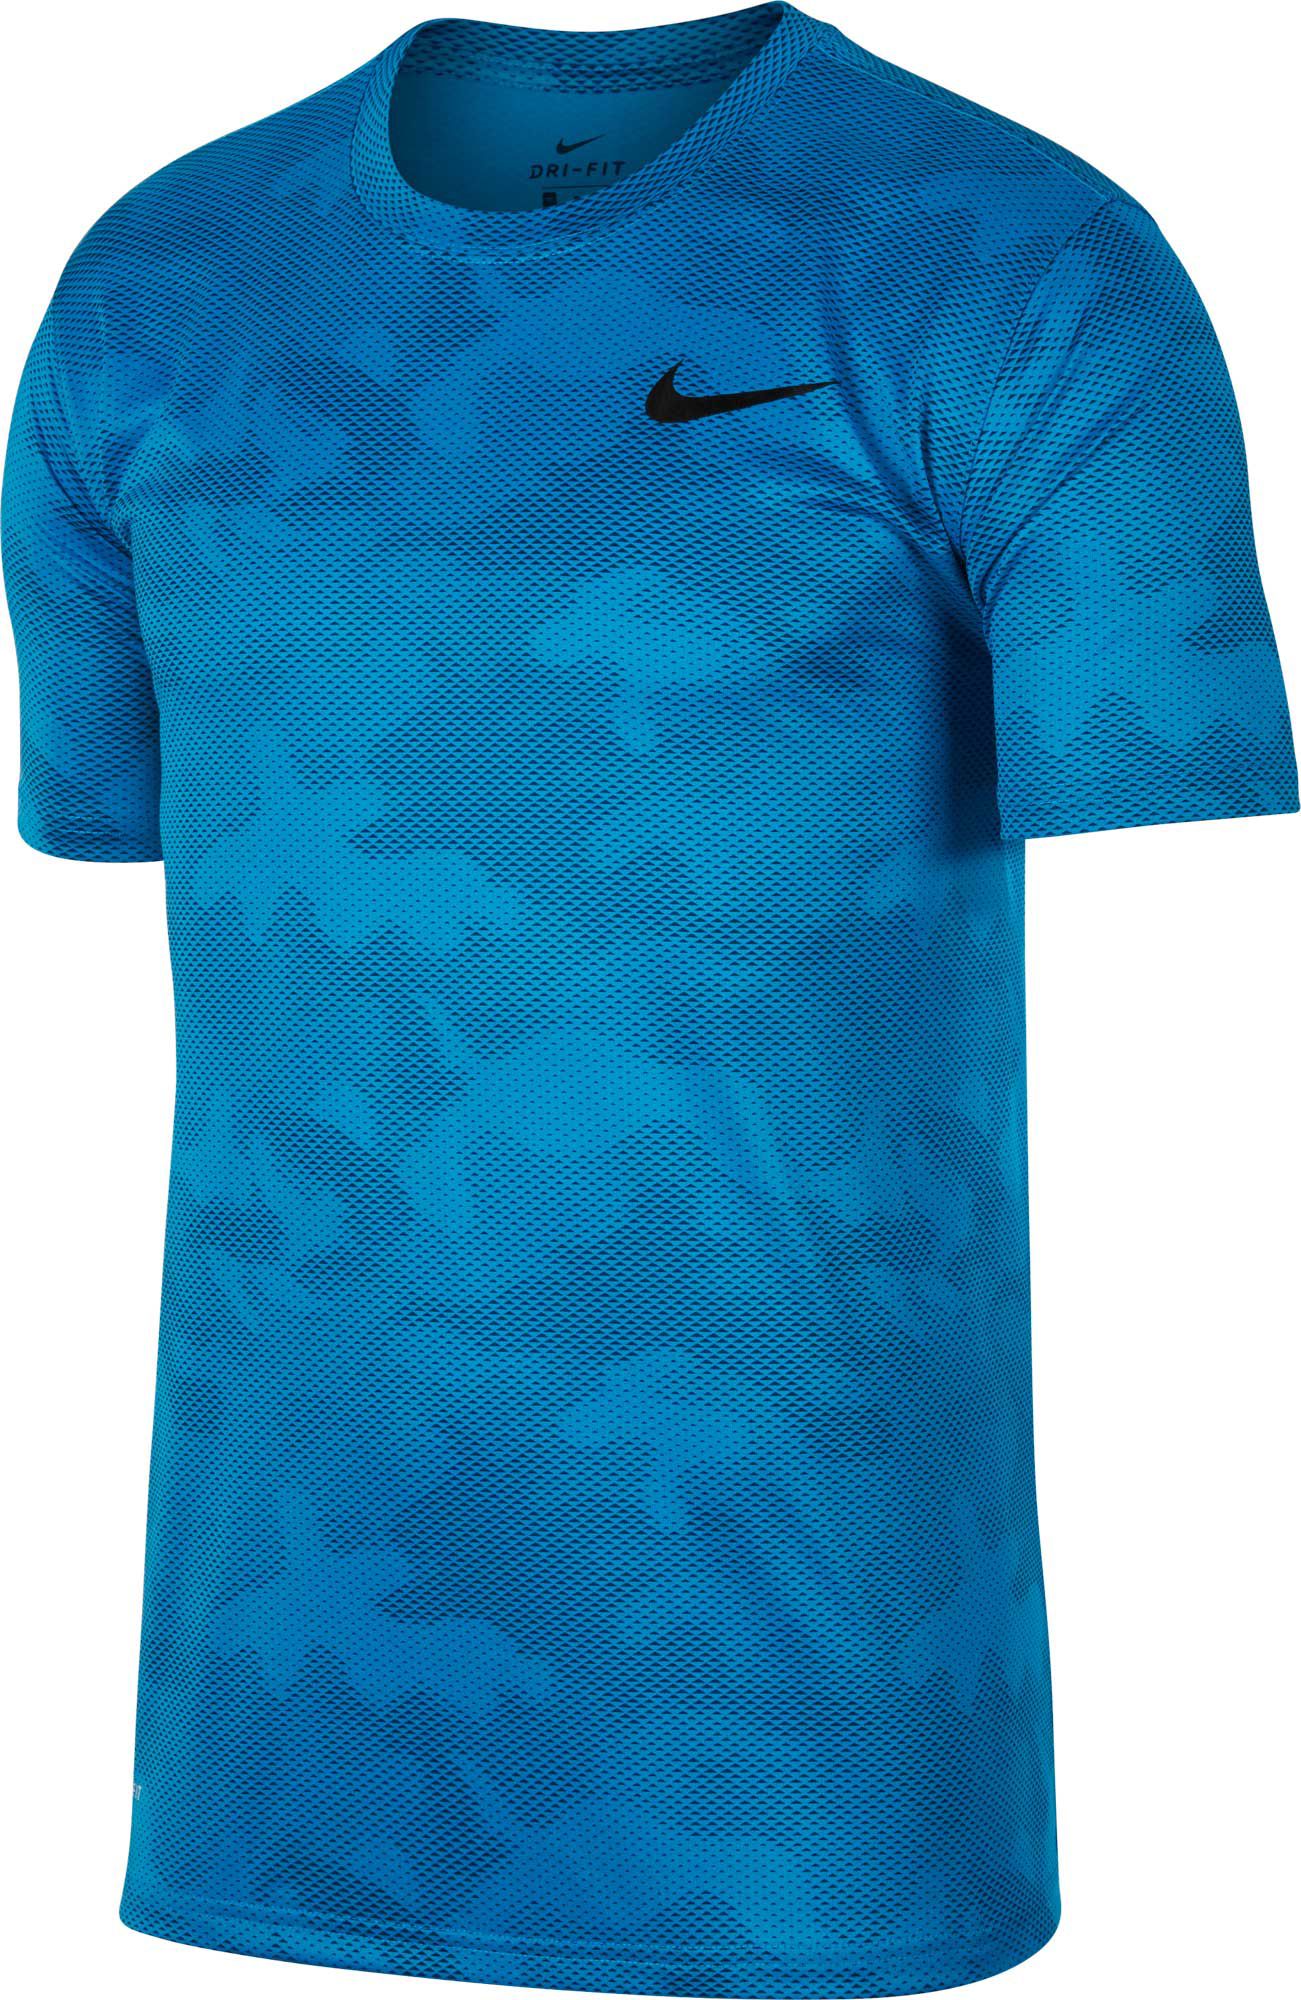 Nike Men's Dry Legend Camo Training T-Shirt - .97